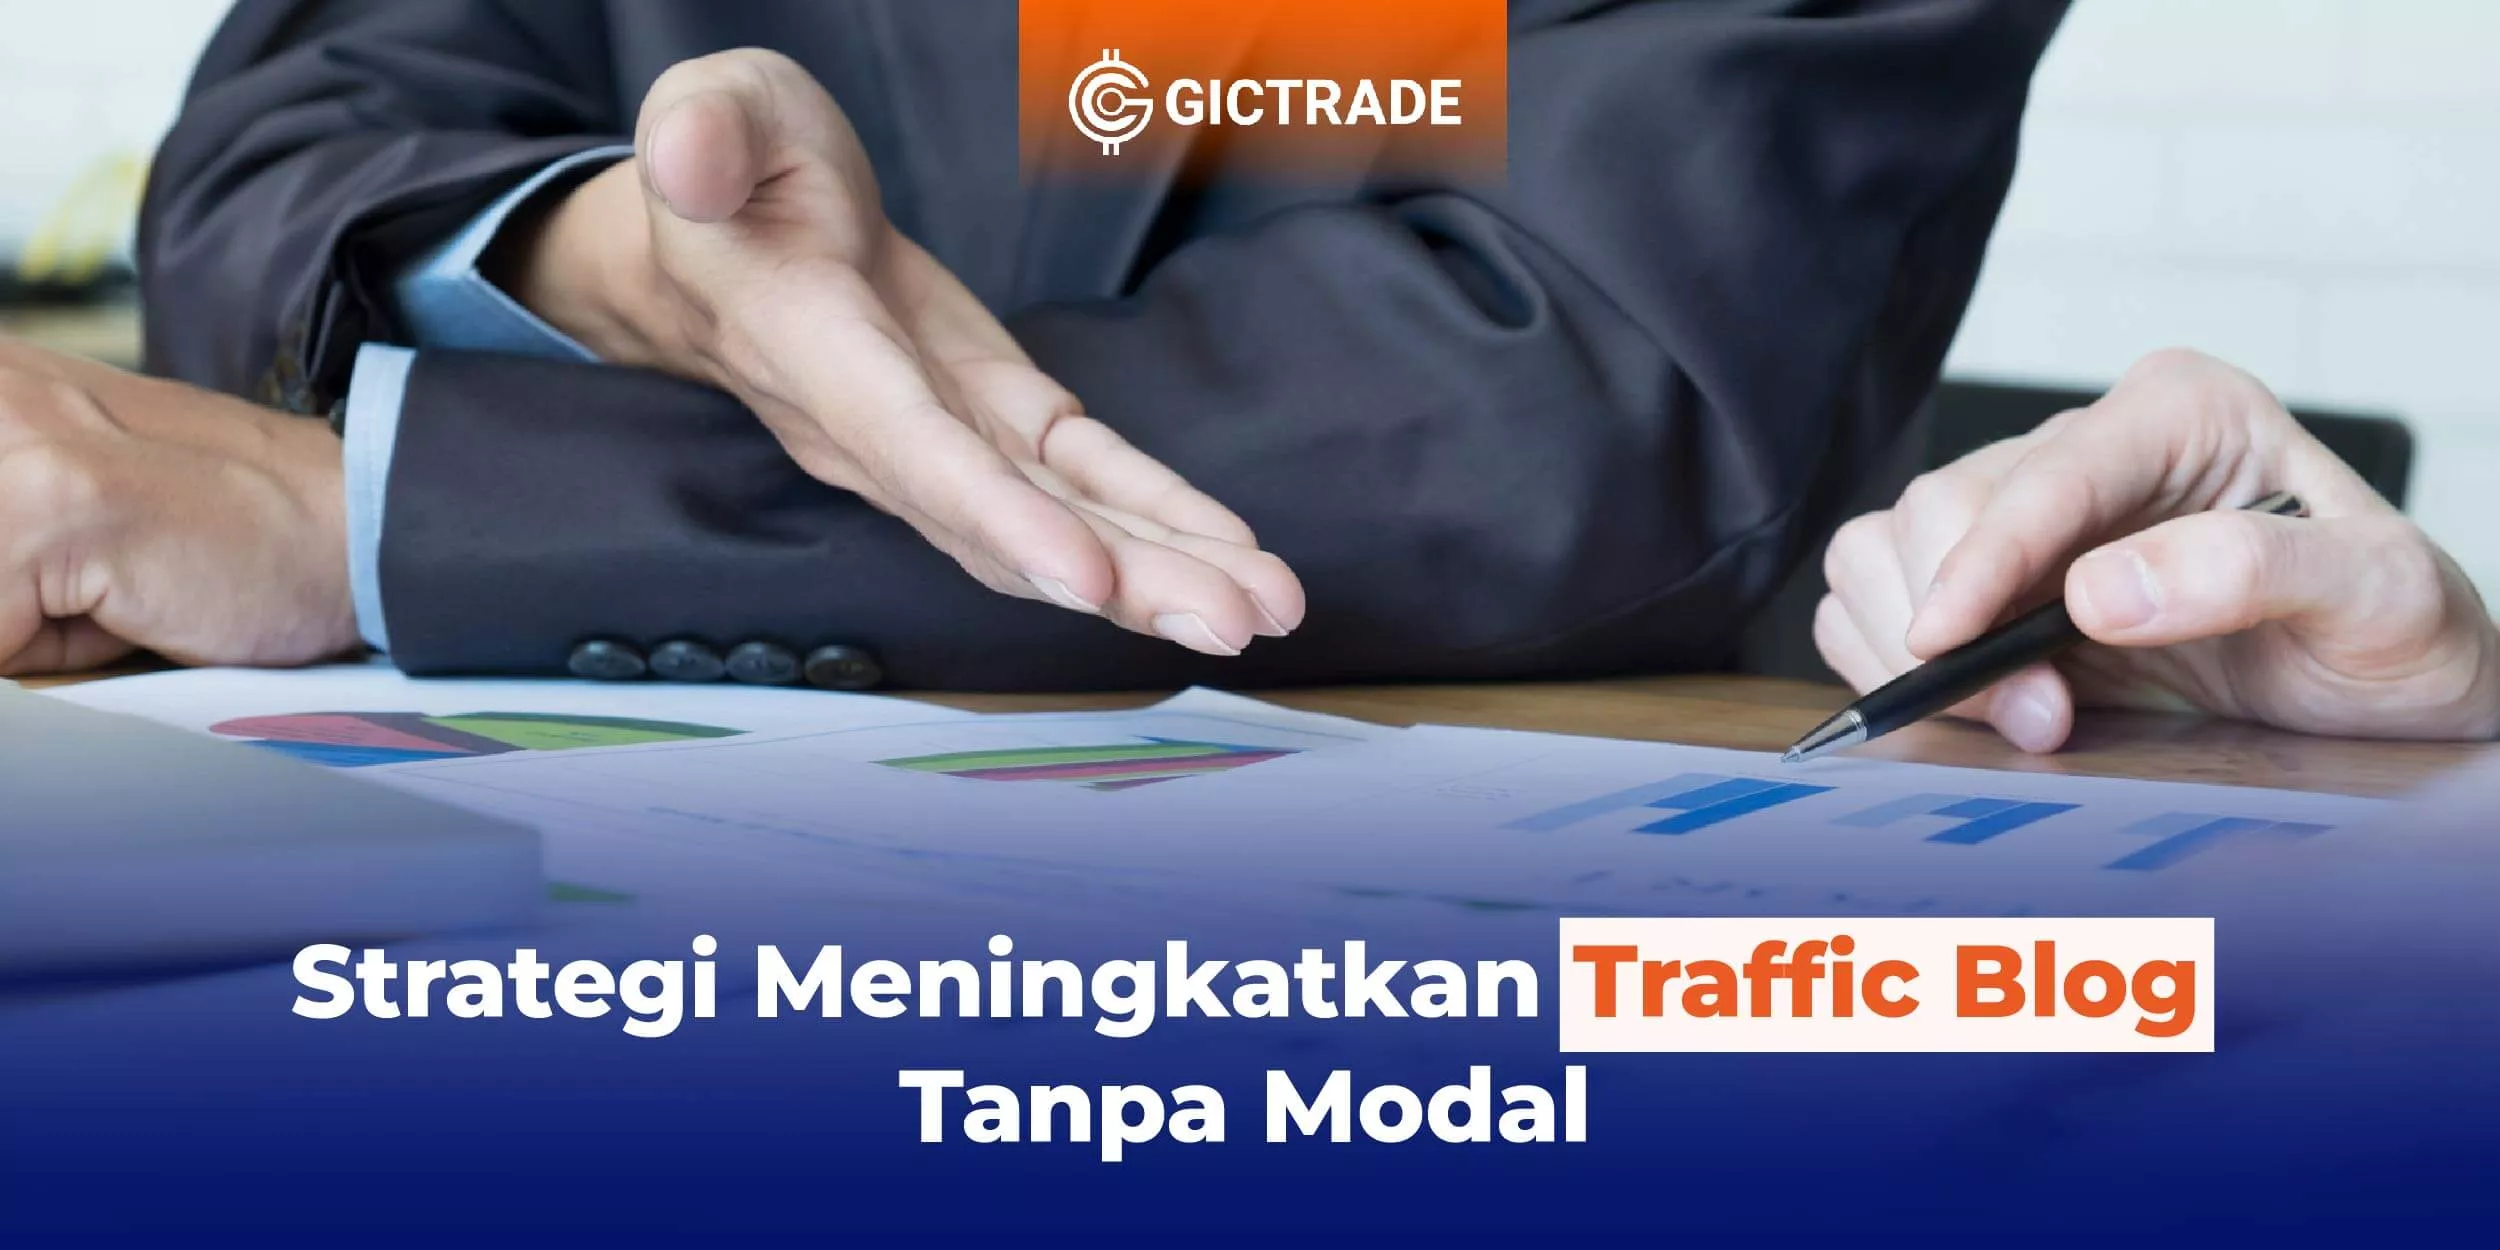 Strategi Meningkatkan Traffic Blog Tanpa Modal